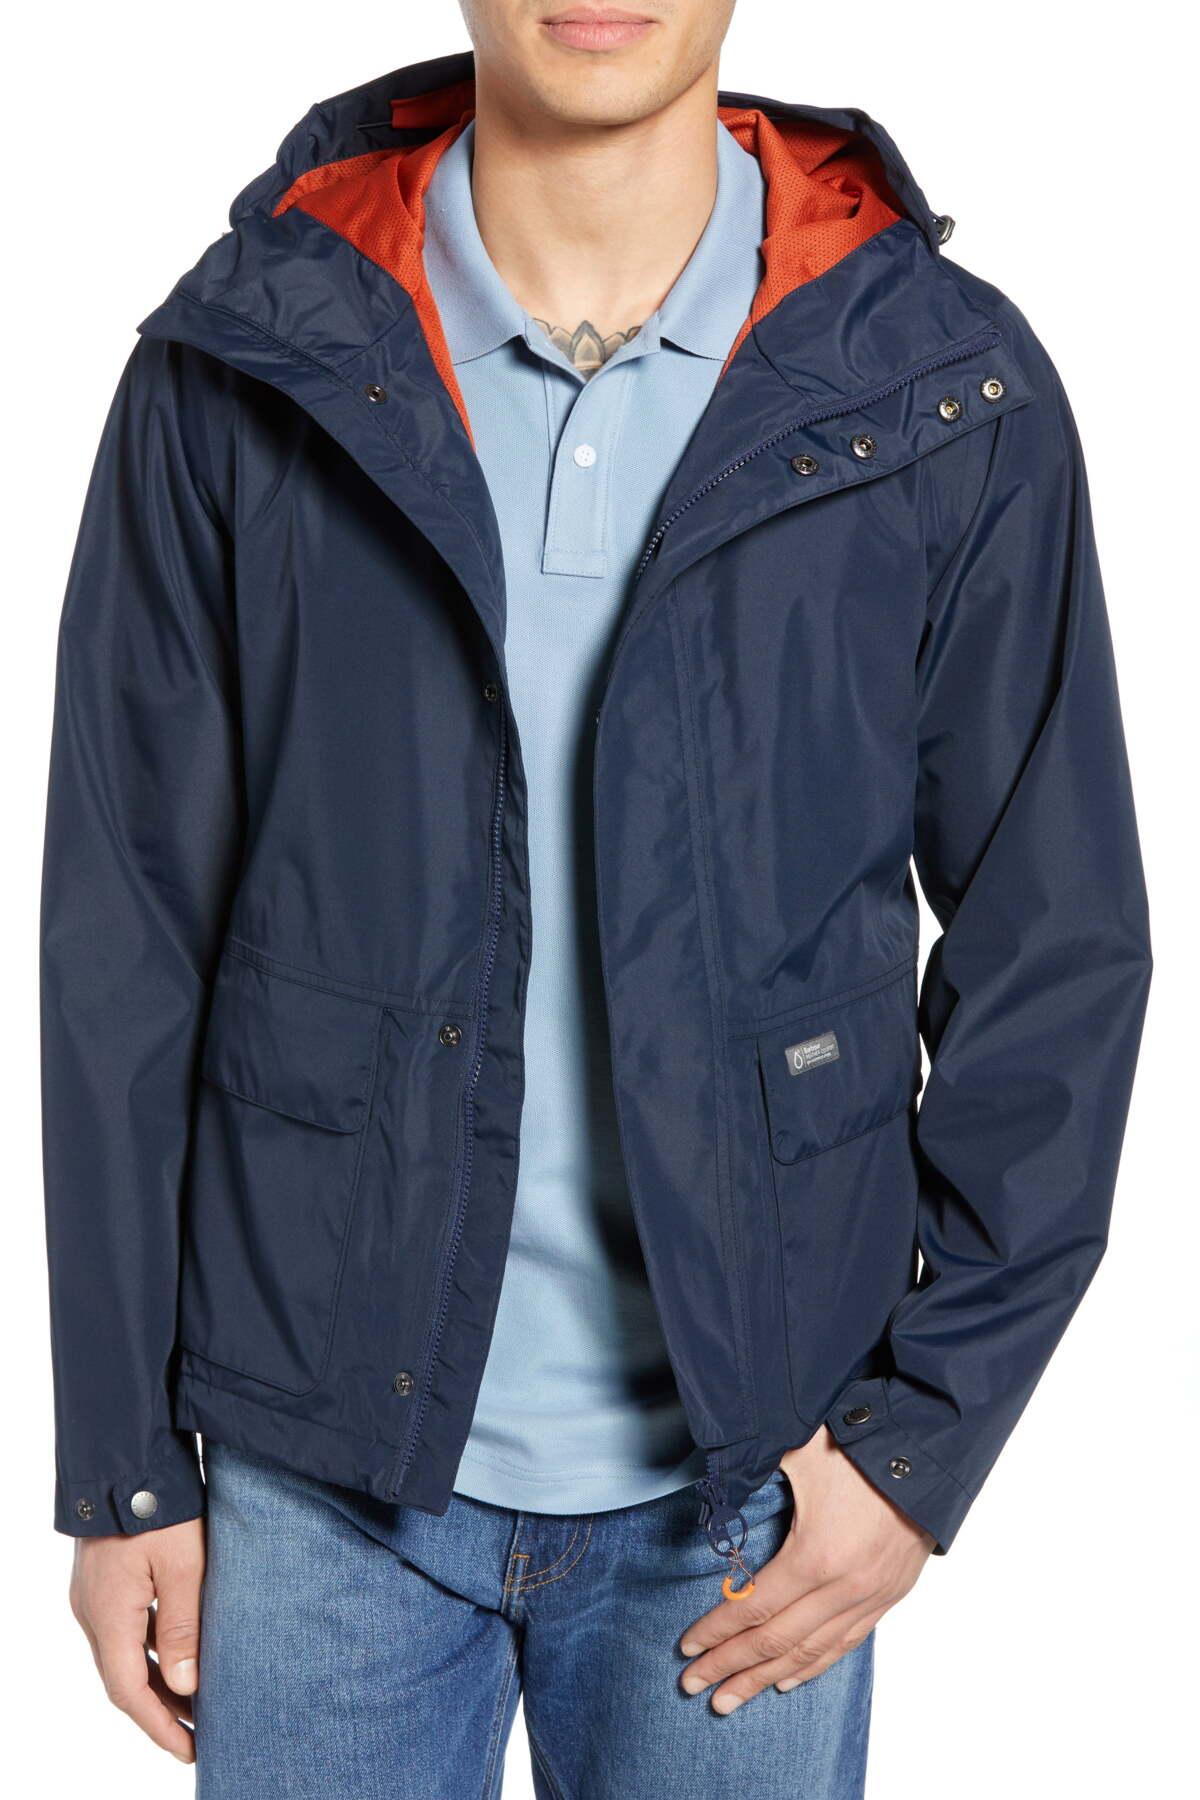 Barbour Foxtrot Waterproof Hooded Jacket in Navy (Blue) for Men - Lyst